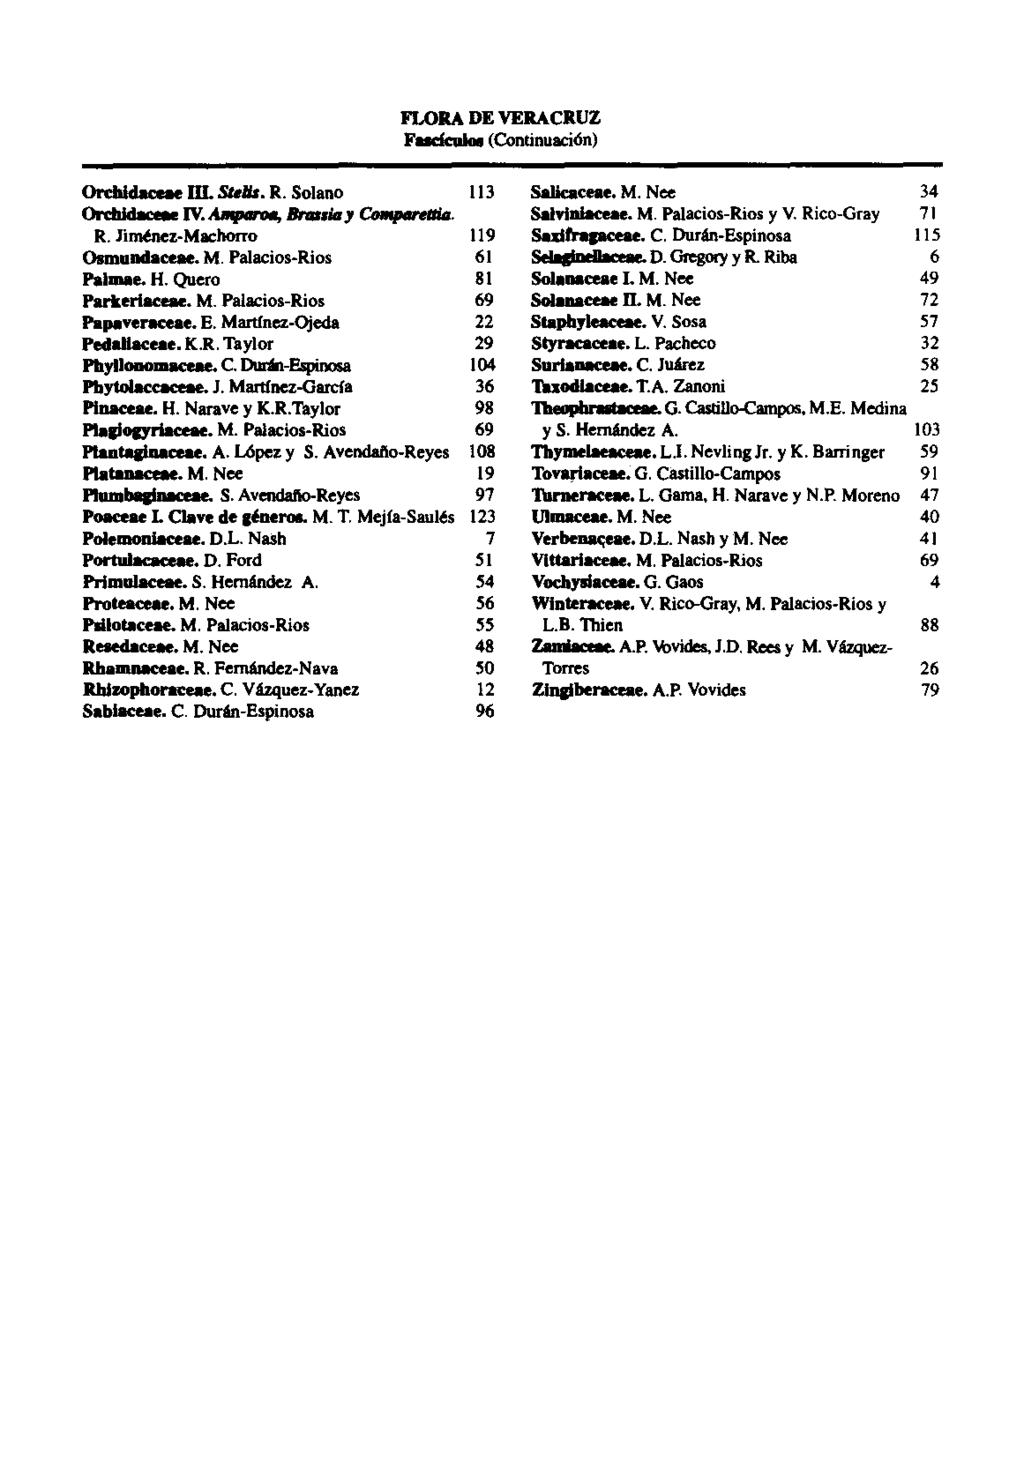 FLORA DE VERACRUZ FudcuIoI (Continuación) 0rddcIaceae lb. SUIU. R. Solano ll3 0rc:Ilid-.e IV.~..,is, eo.,..,aid. R. Jimblez-Mac:horro 119 Osmundaceae. M. Palacios-Rios 61 Pah...e. H.